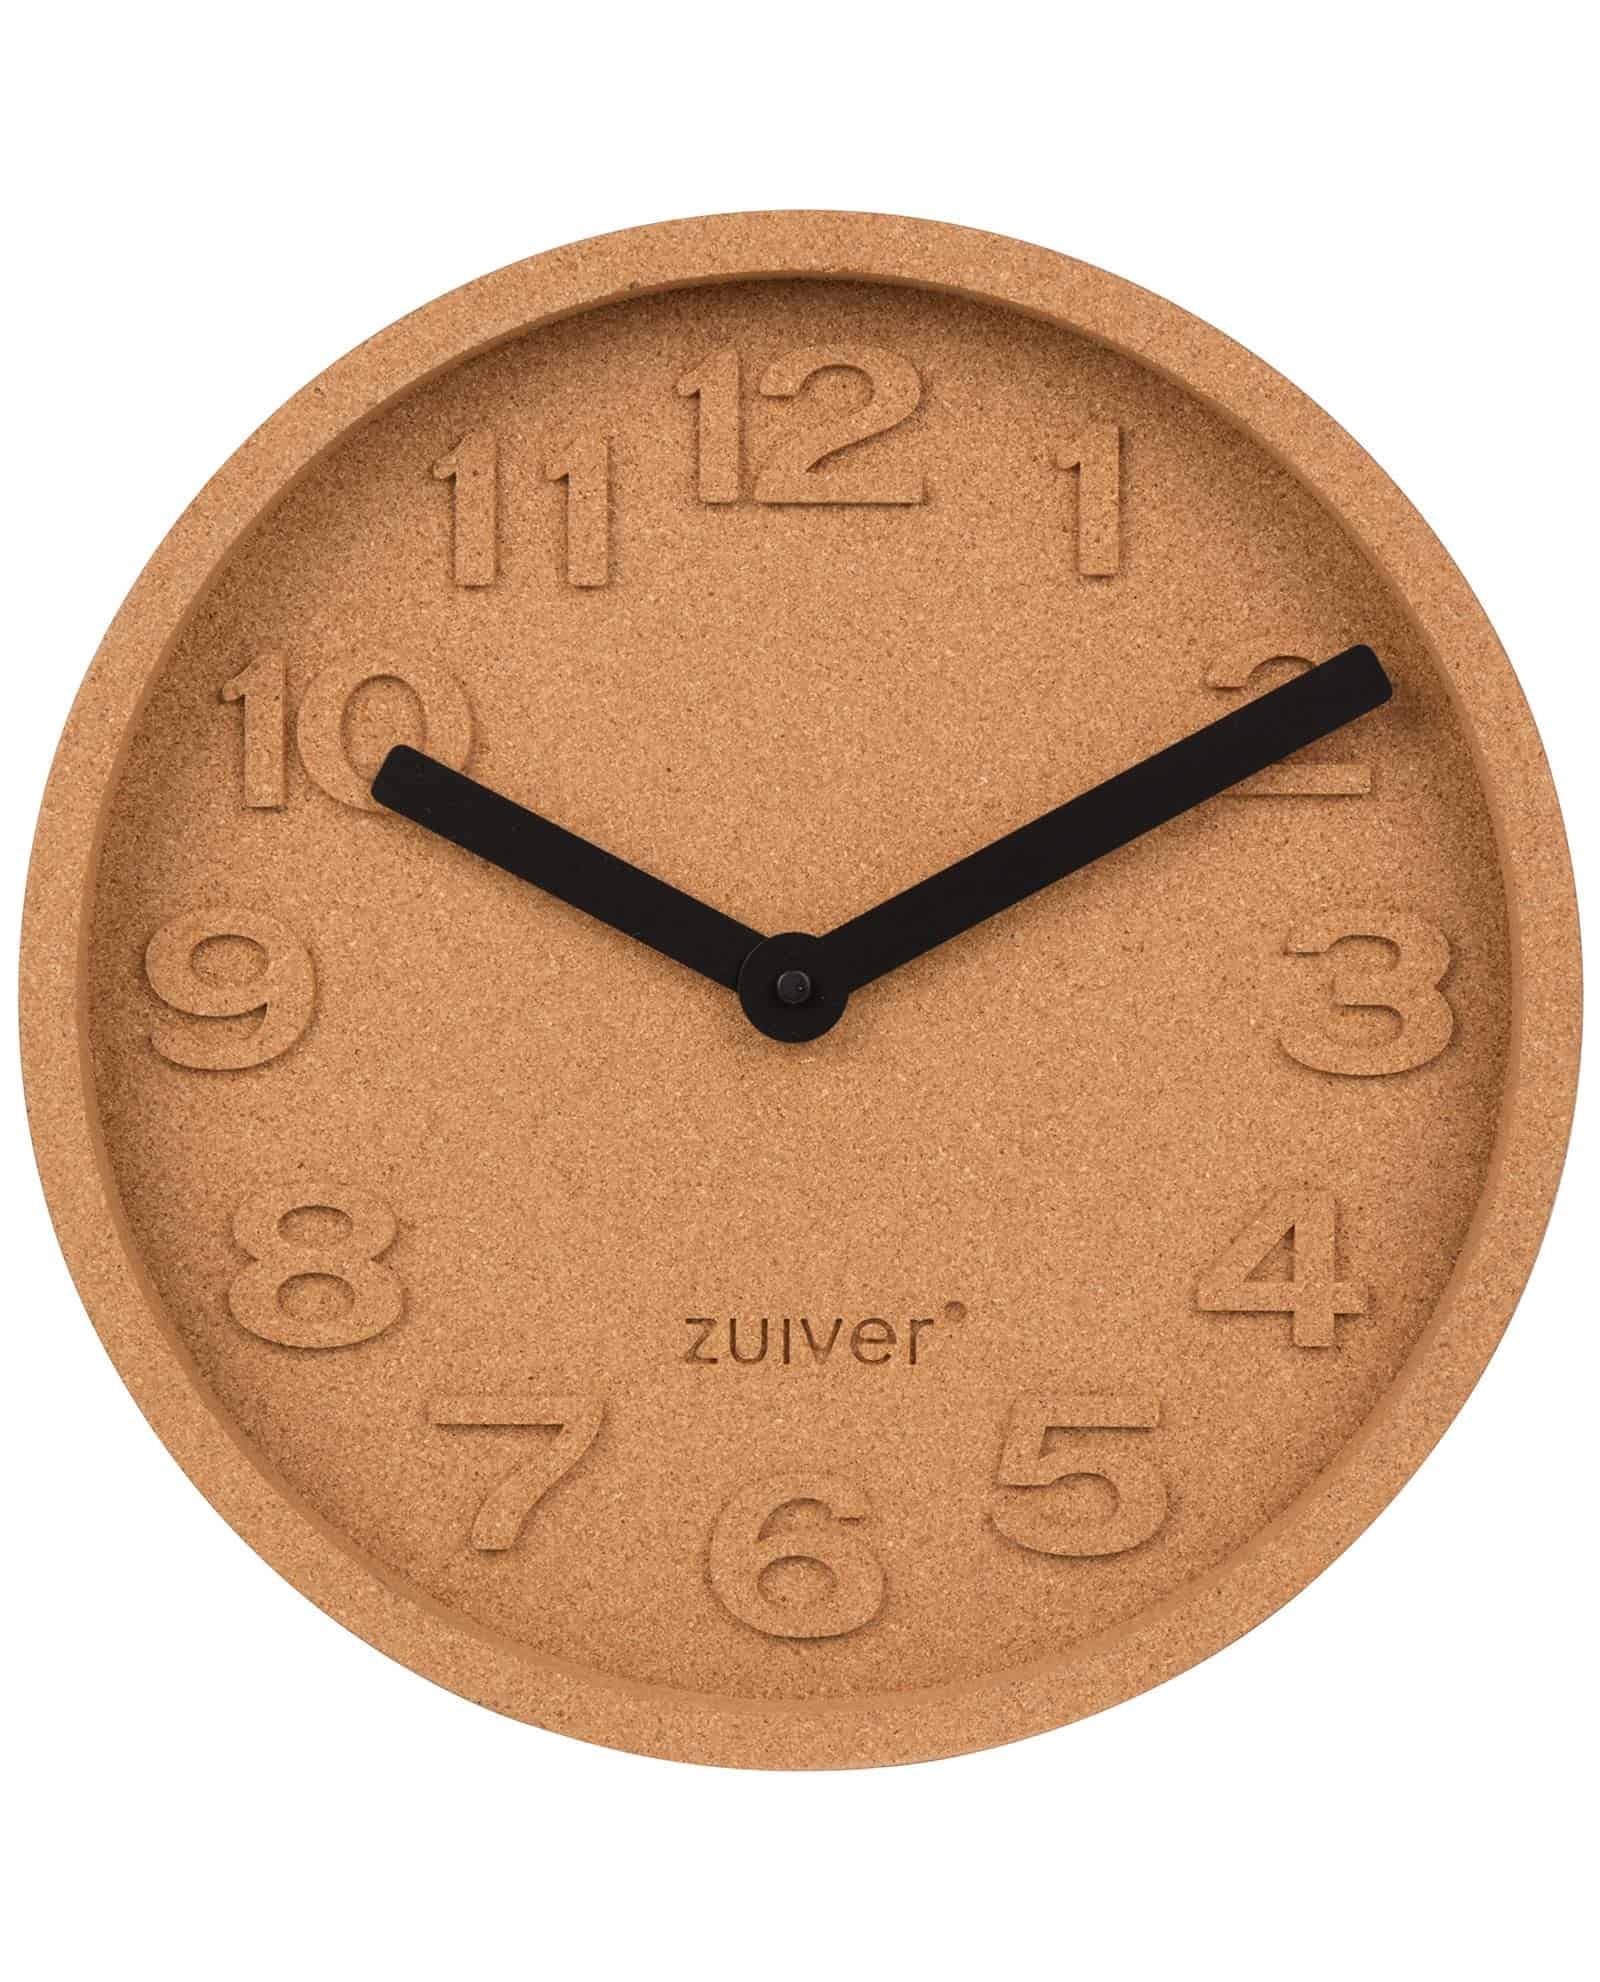 Leugen De andere dag Aardewerk Cork Time klok by Zuiver - Designshopp